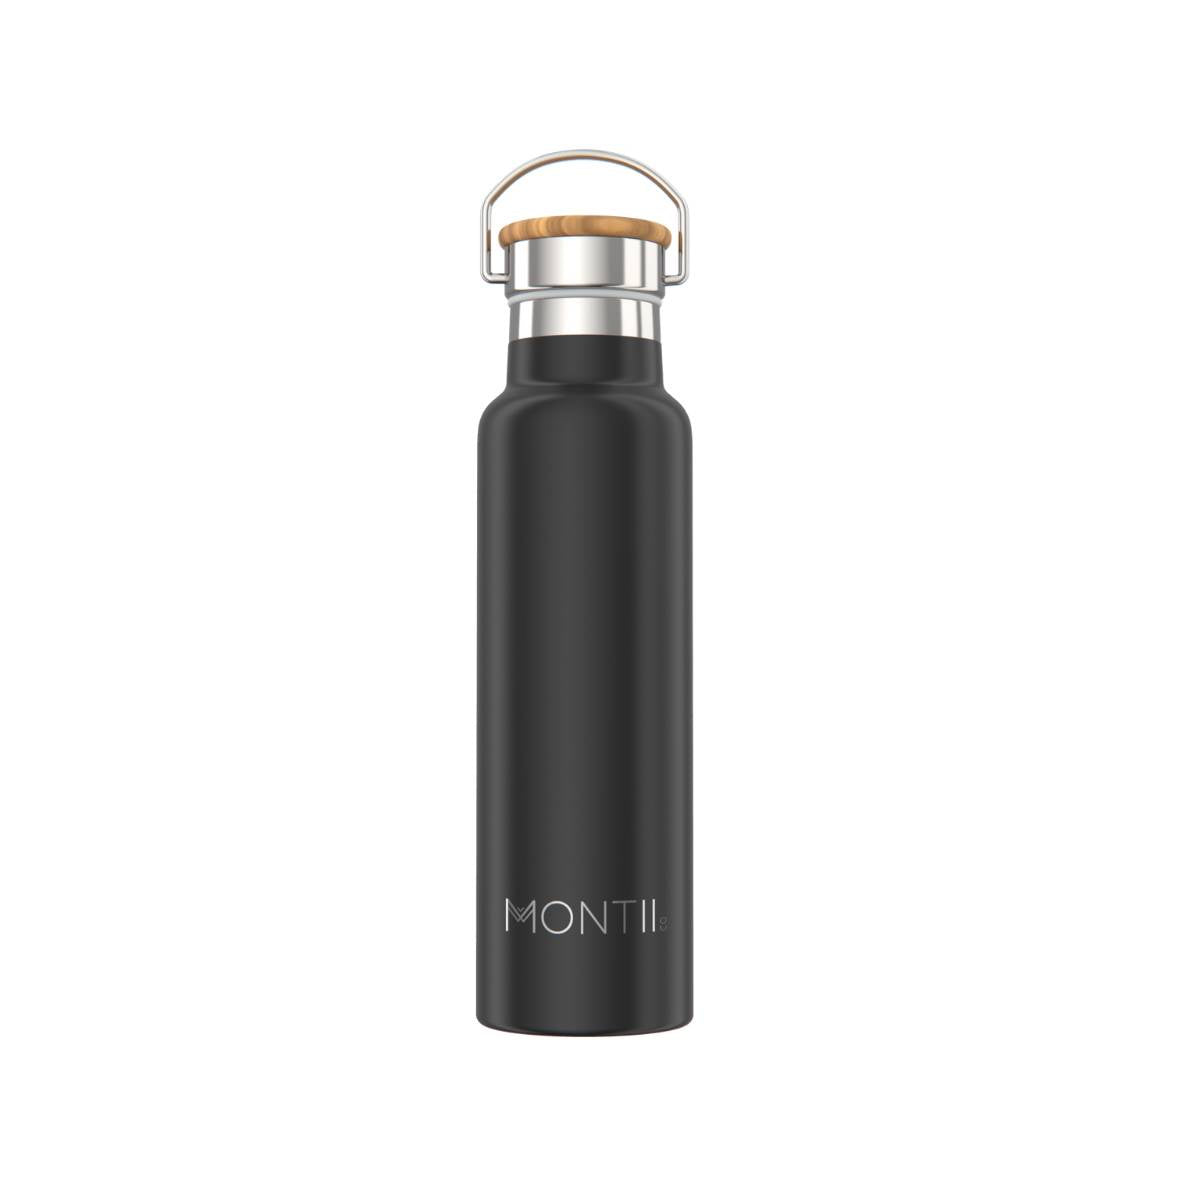 MONTIICO | Original Bottle Black (6656902987836)